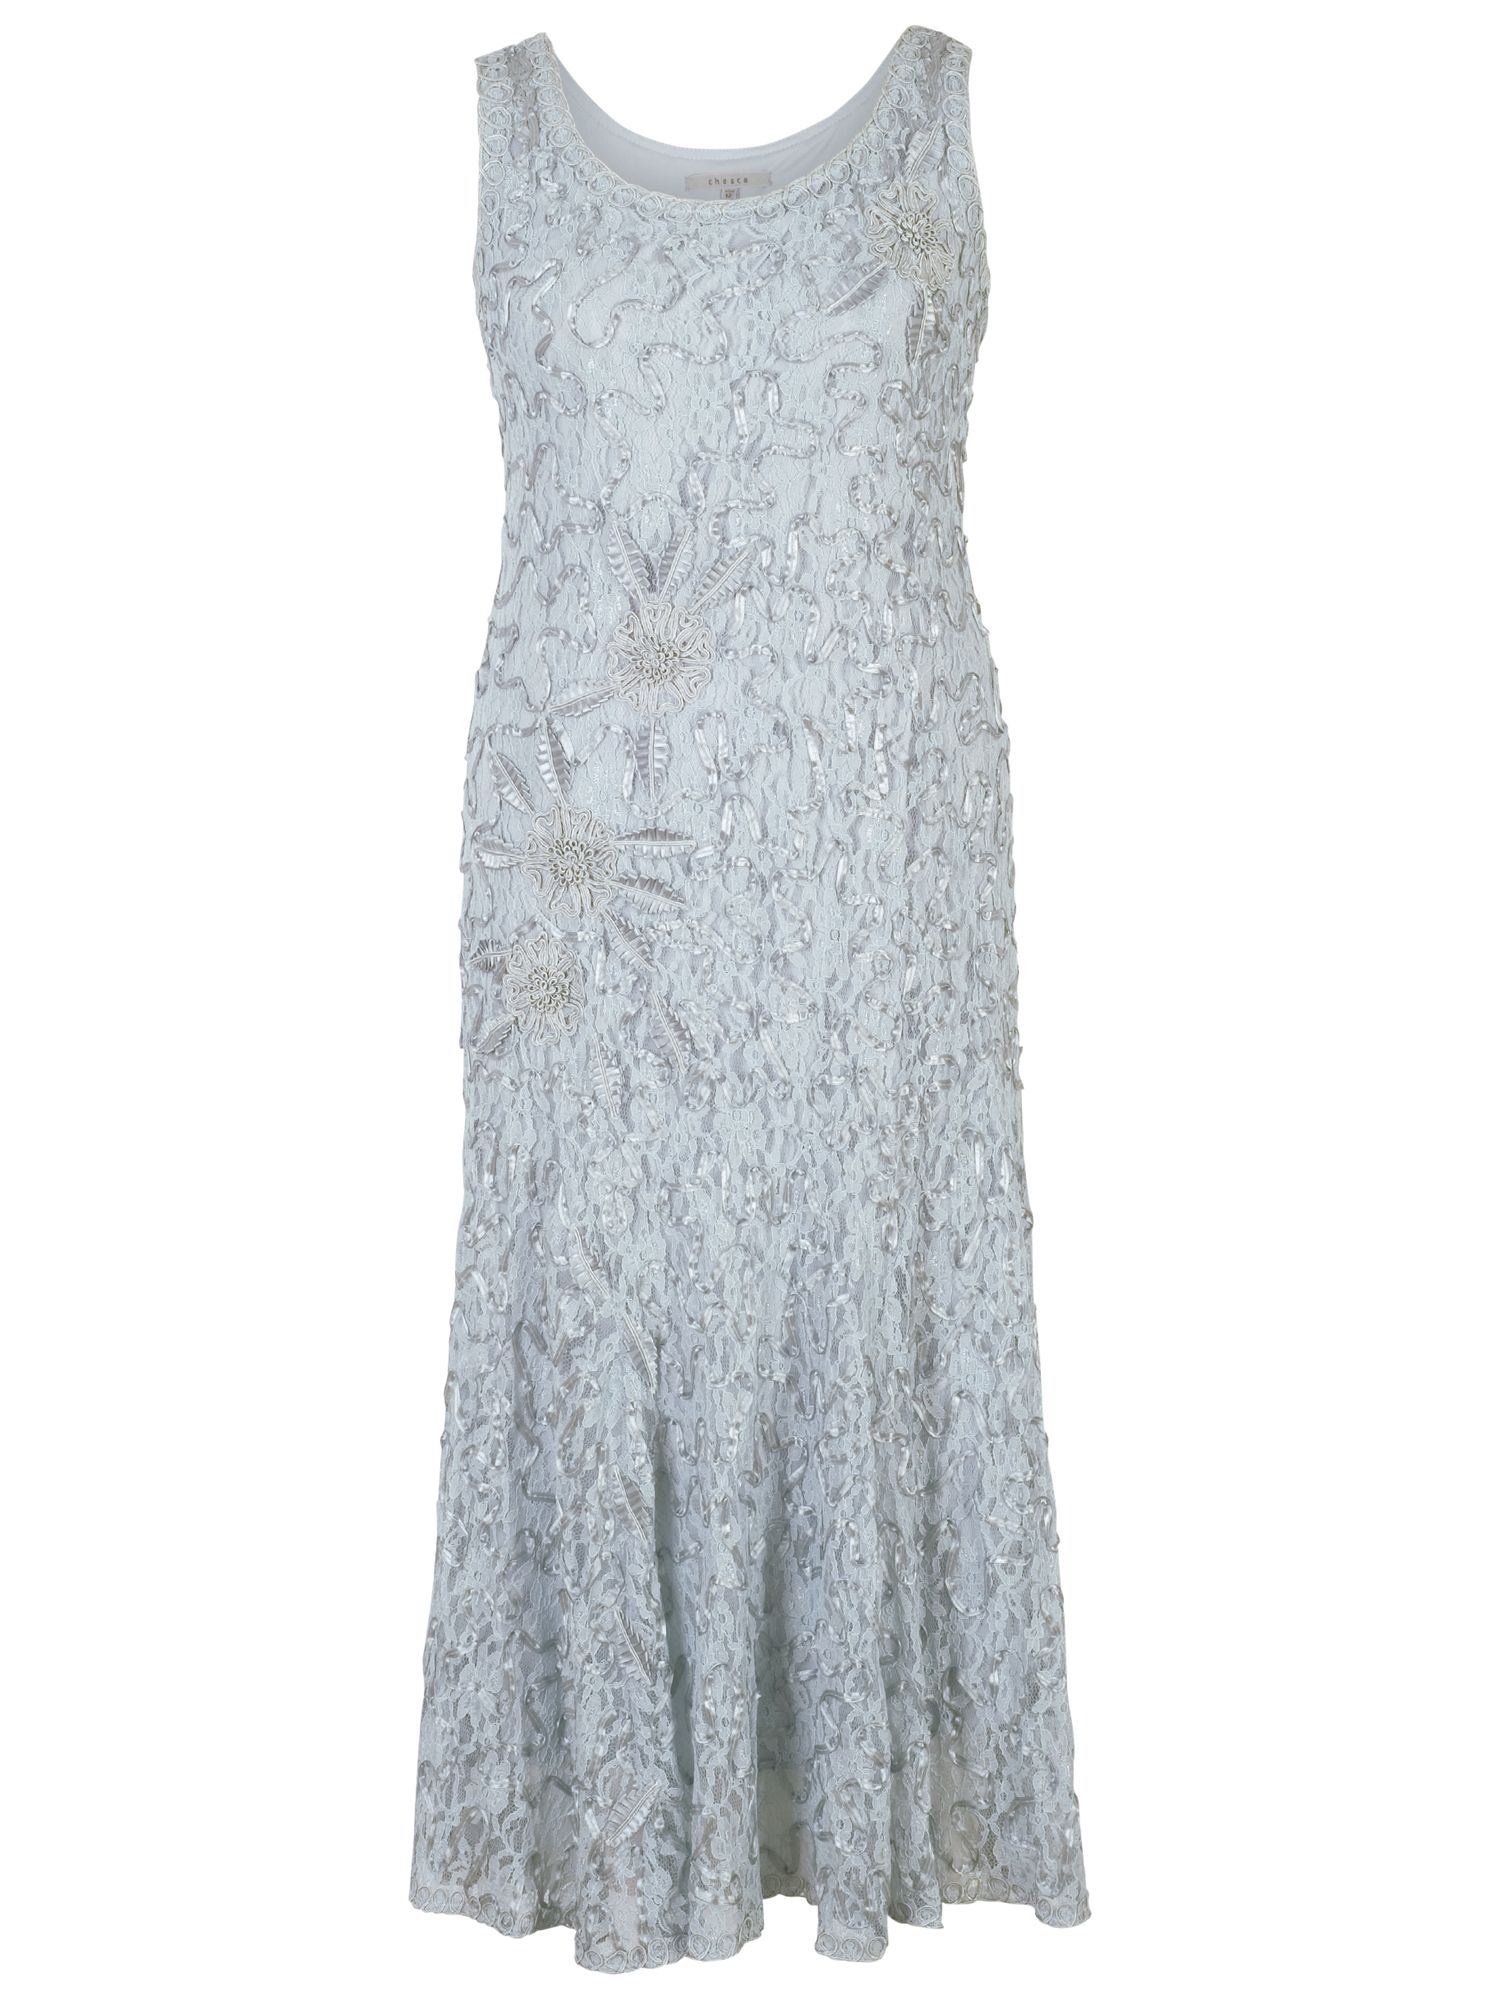 Chesca Lace Cornelli Dress, Aqua at John Lewis & Partners